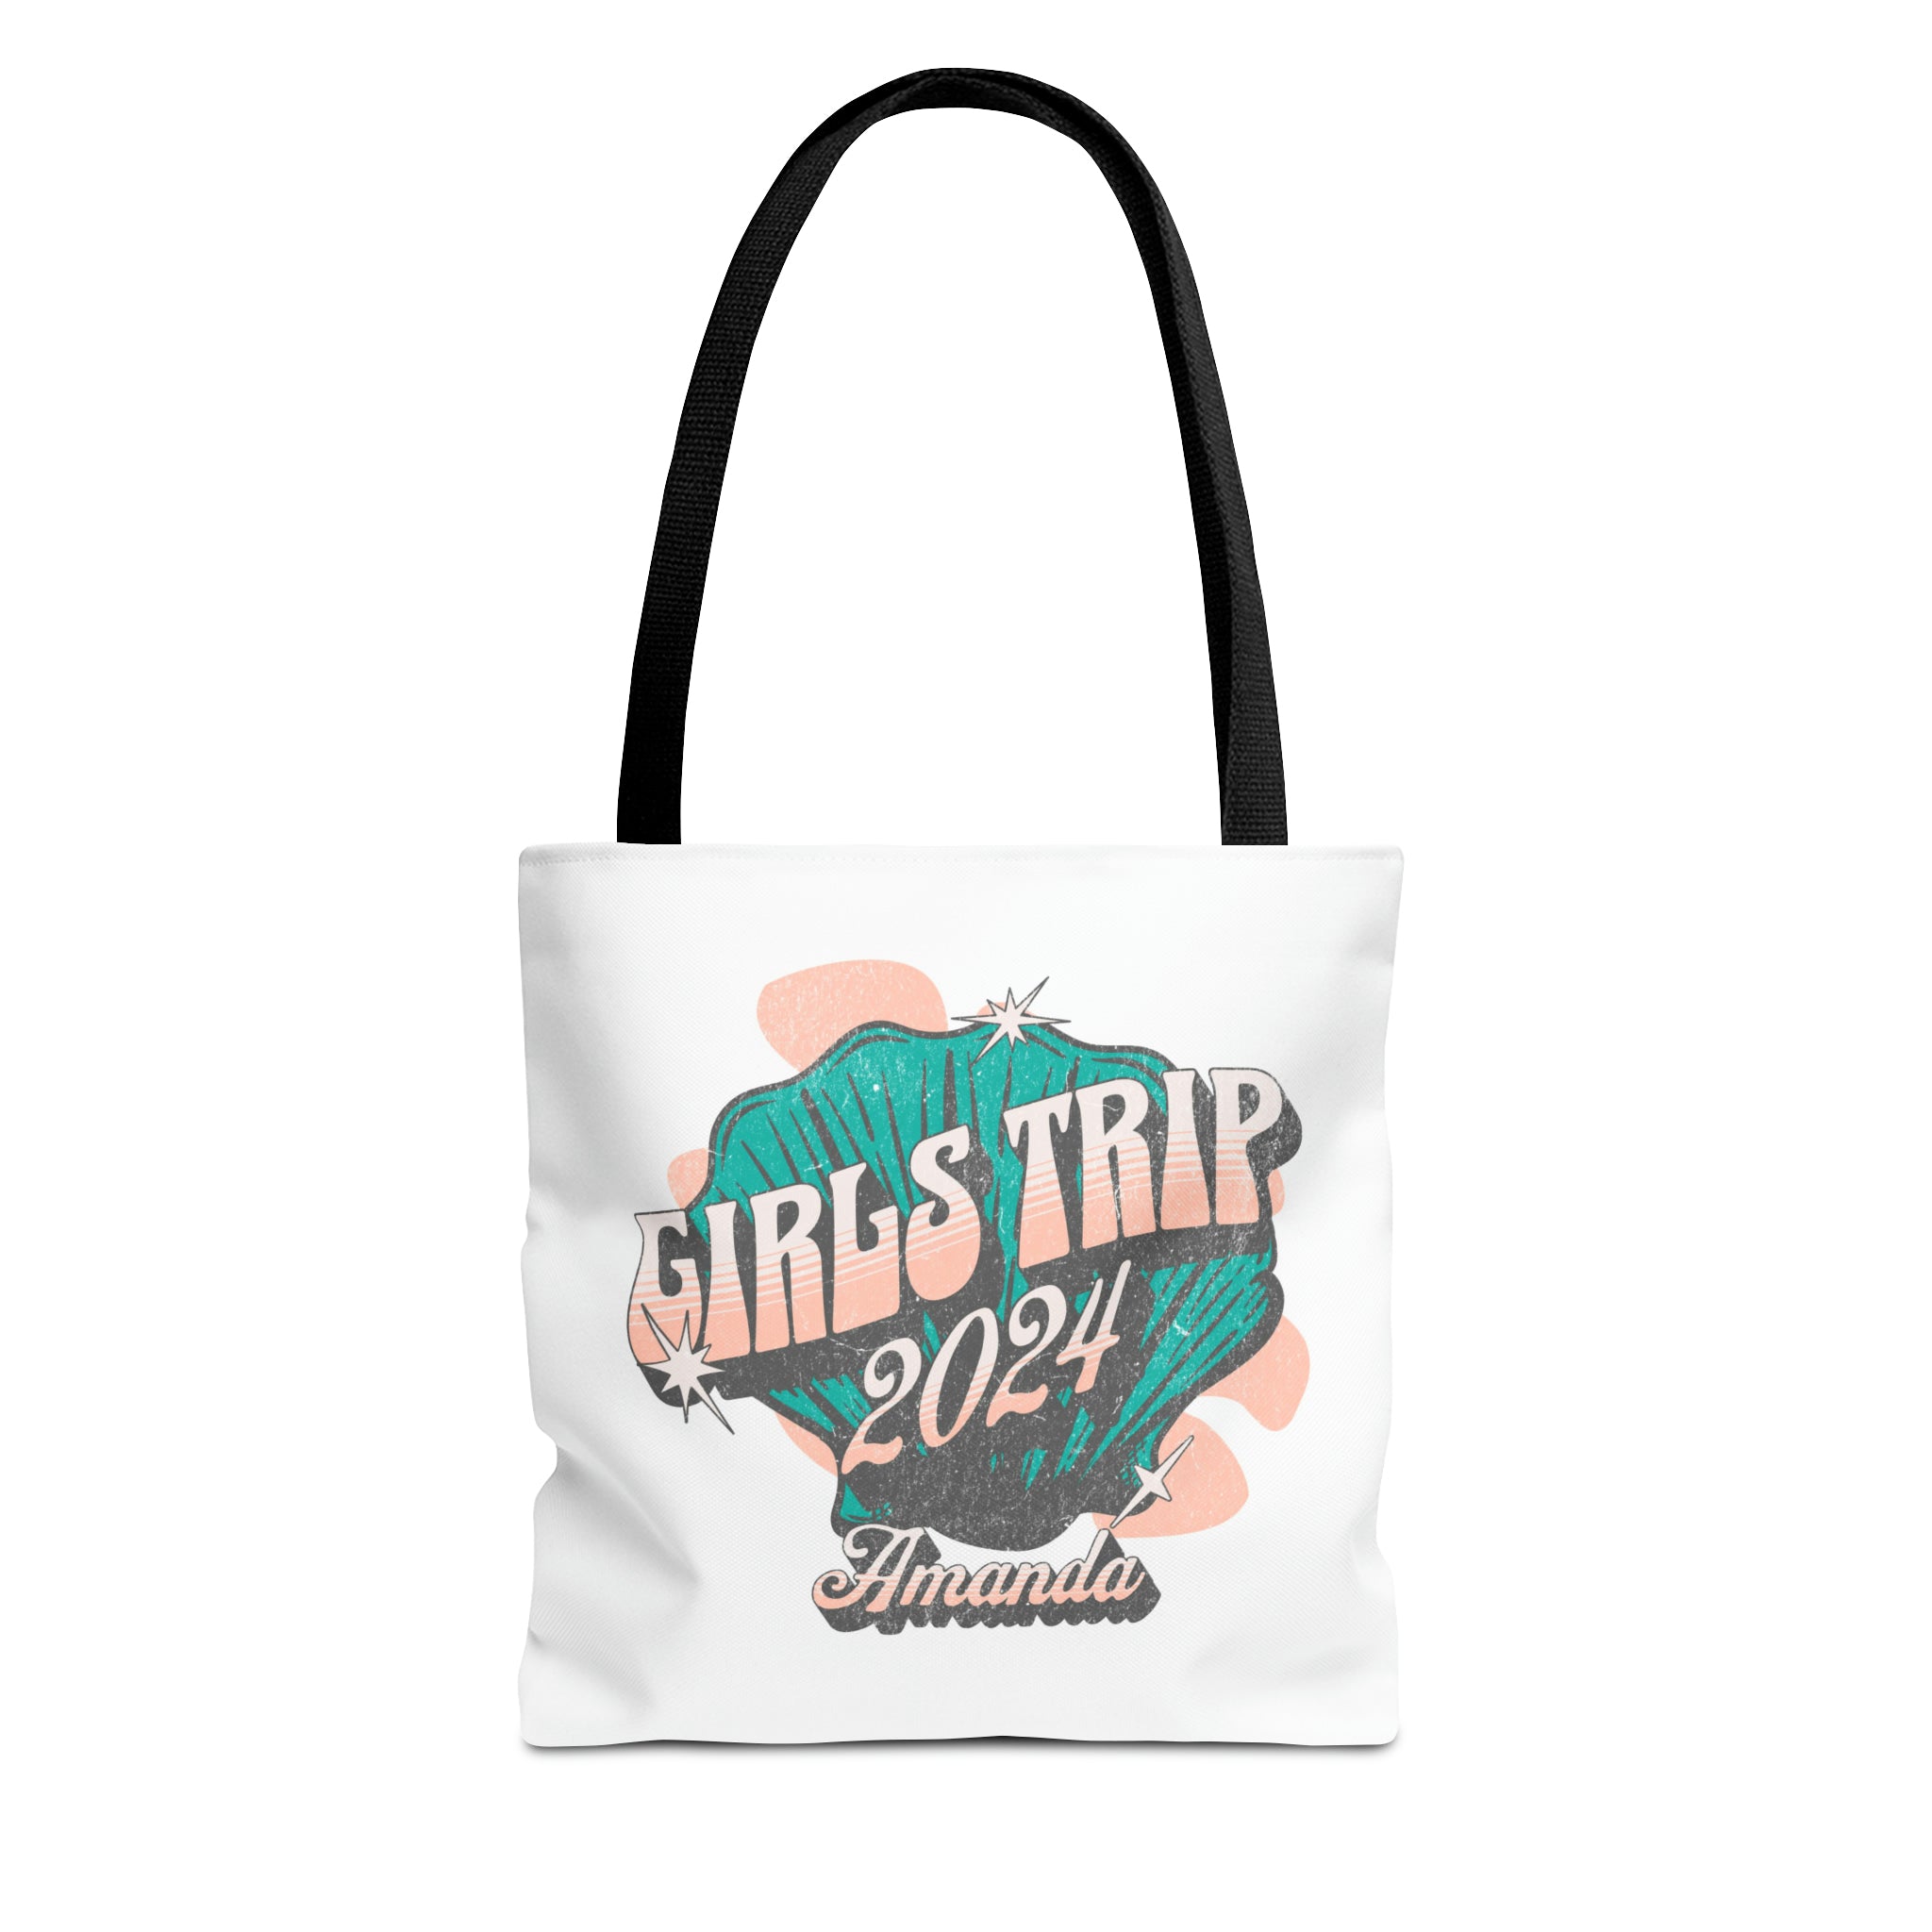 Shell Girls Trip Tote Bag